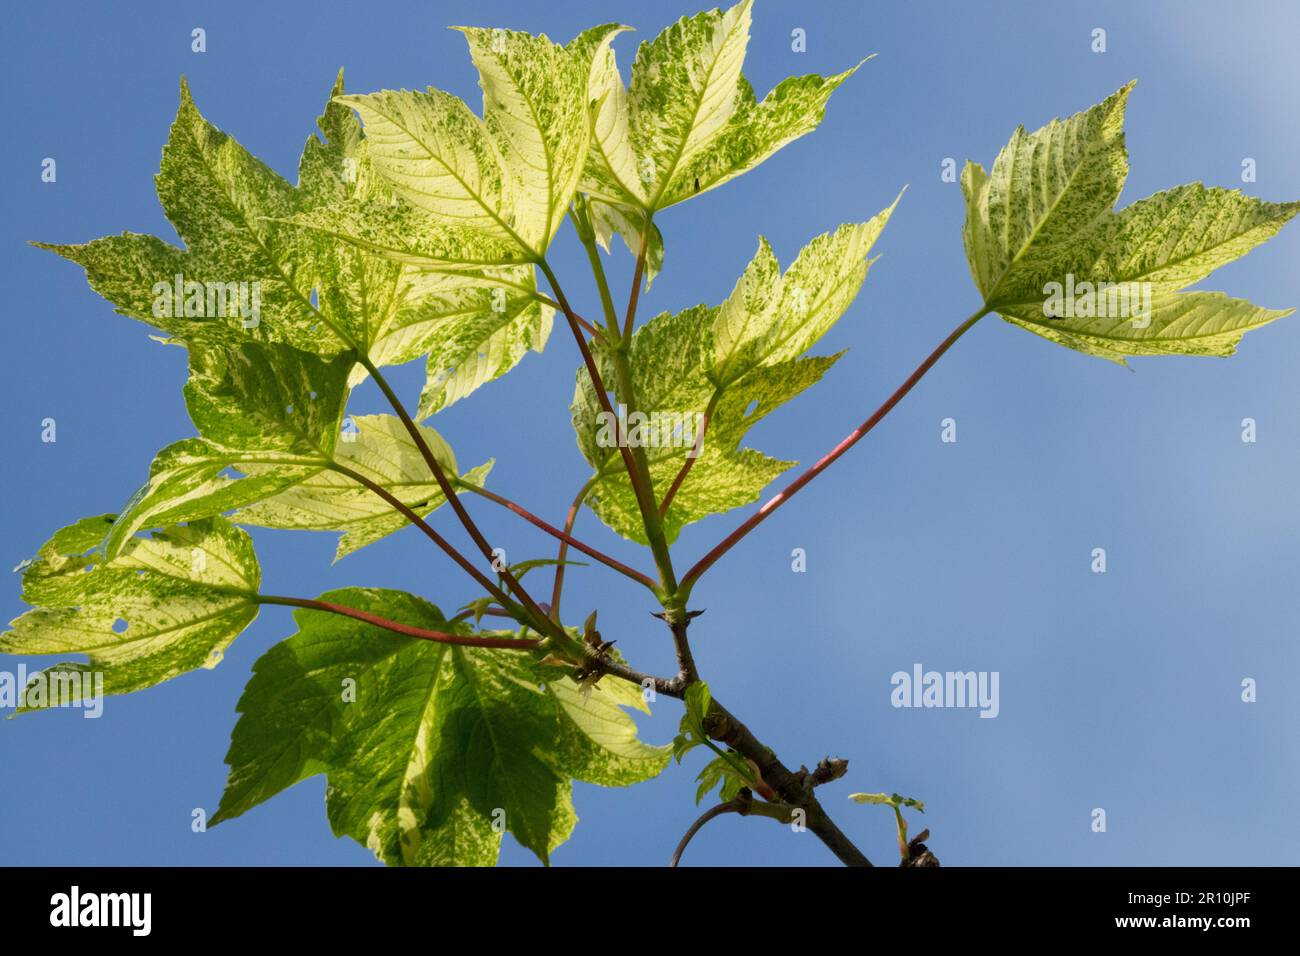 Sycamore tree, Leaves, Foliage, Branch, Spring, Yellow, Colour, Maple, Acer pseudoplatanus 'Nizetii' Stock Photo